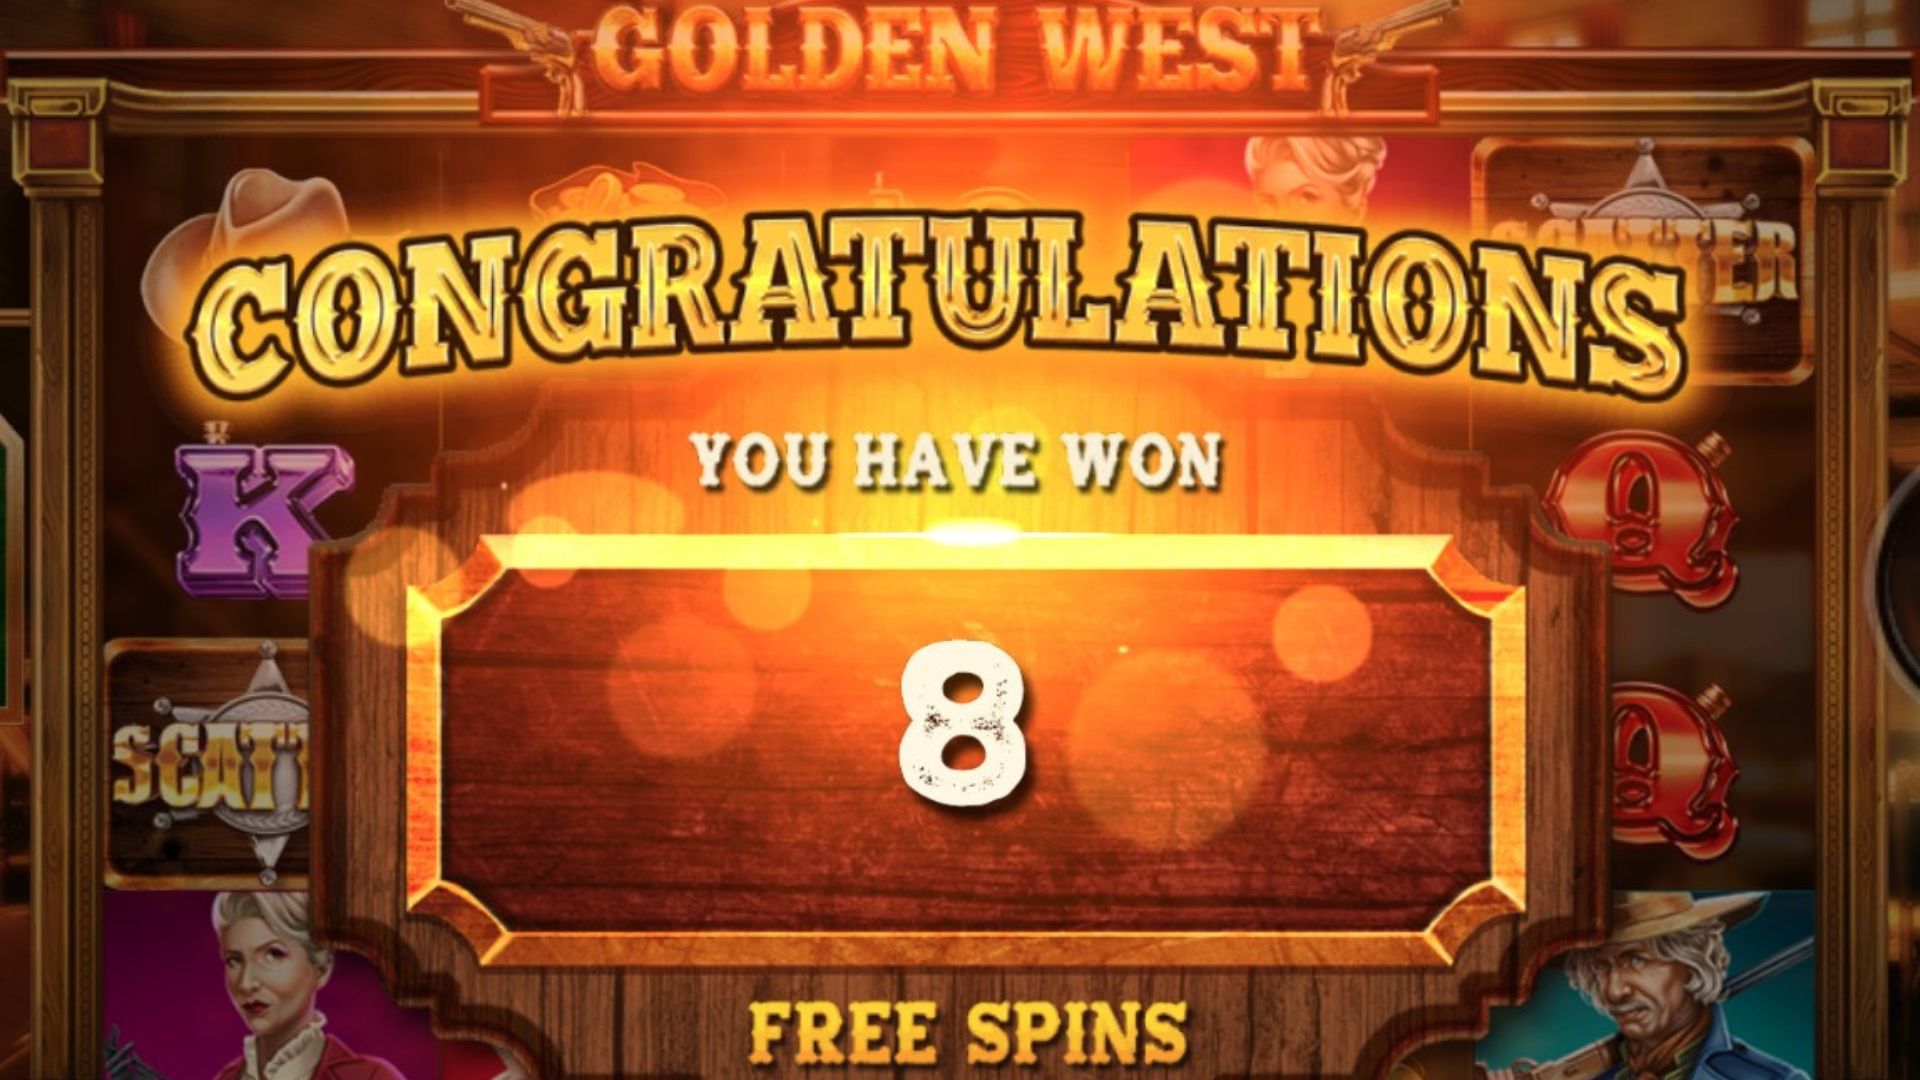 bonus freespin game slot golden west